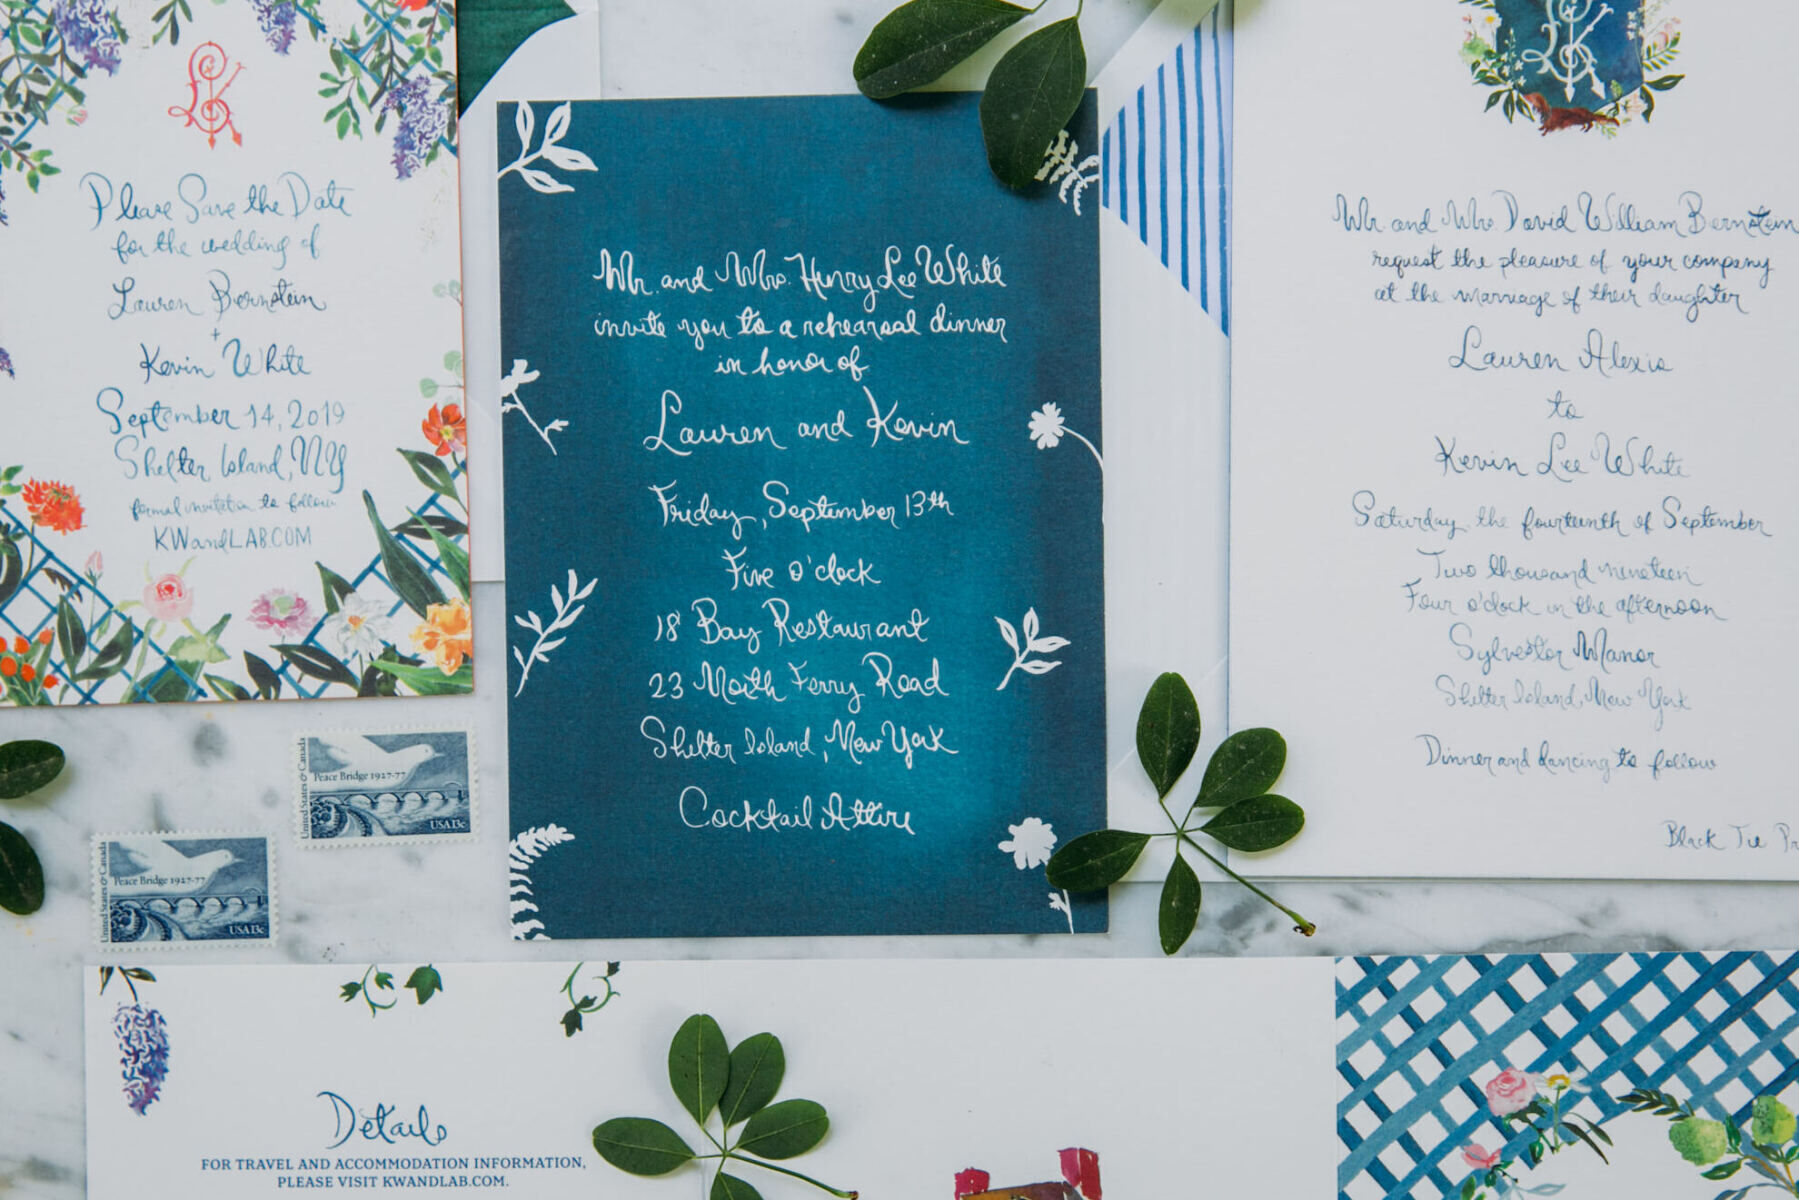 Blue and white floral hand drawn wedding invitation by wedding invitation designer Julie King Studio